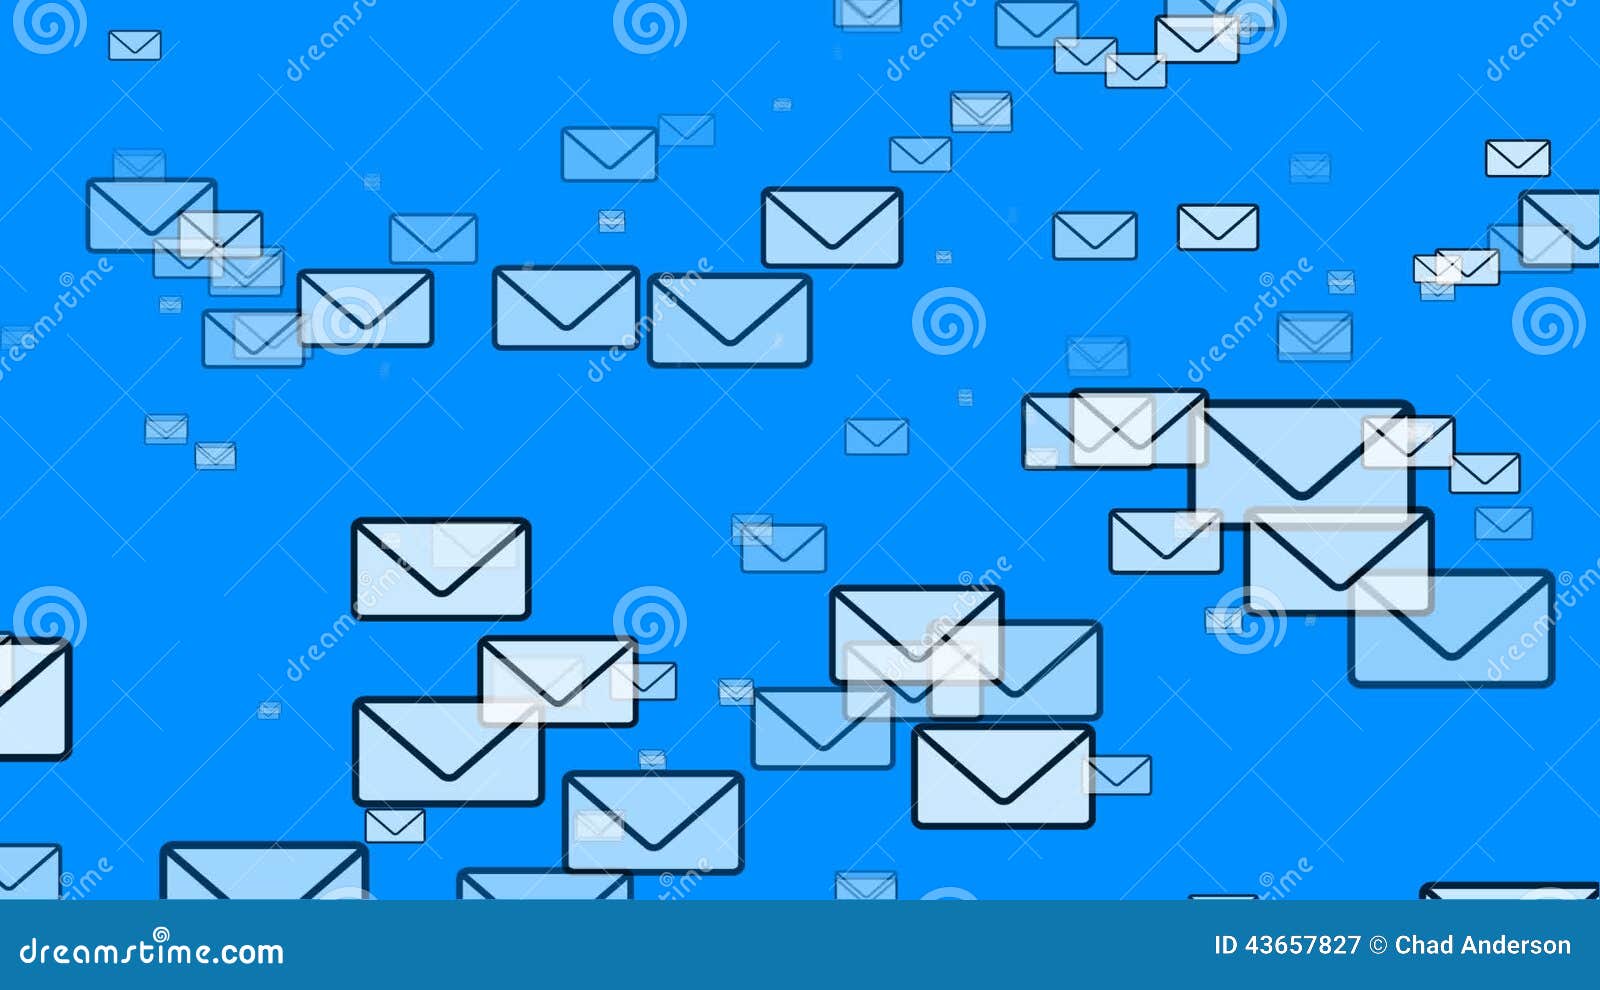 Mail Flying Email Envelopes Stock Video Video Of Envelope Send